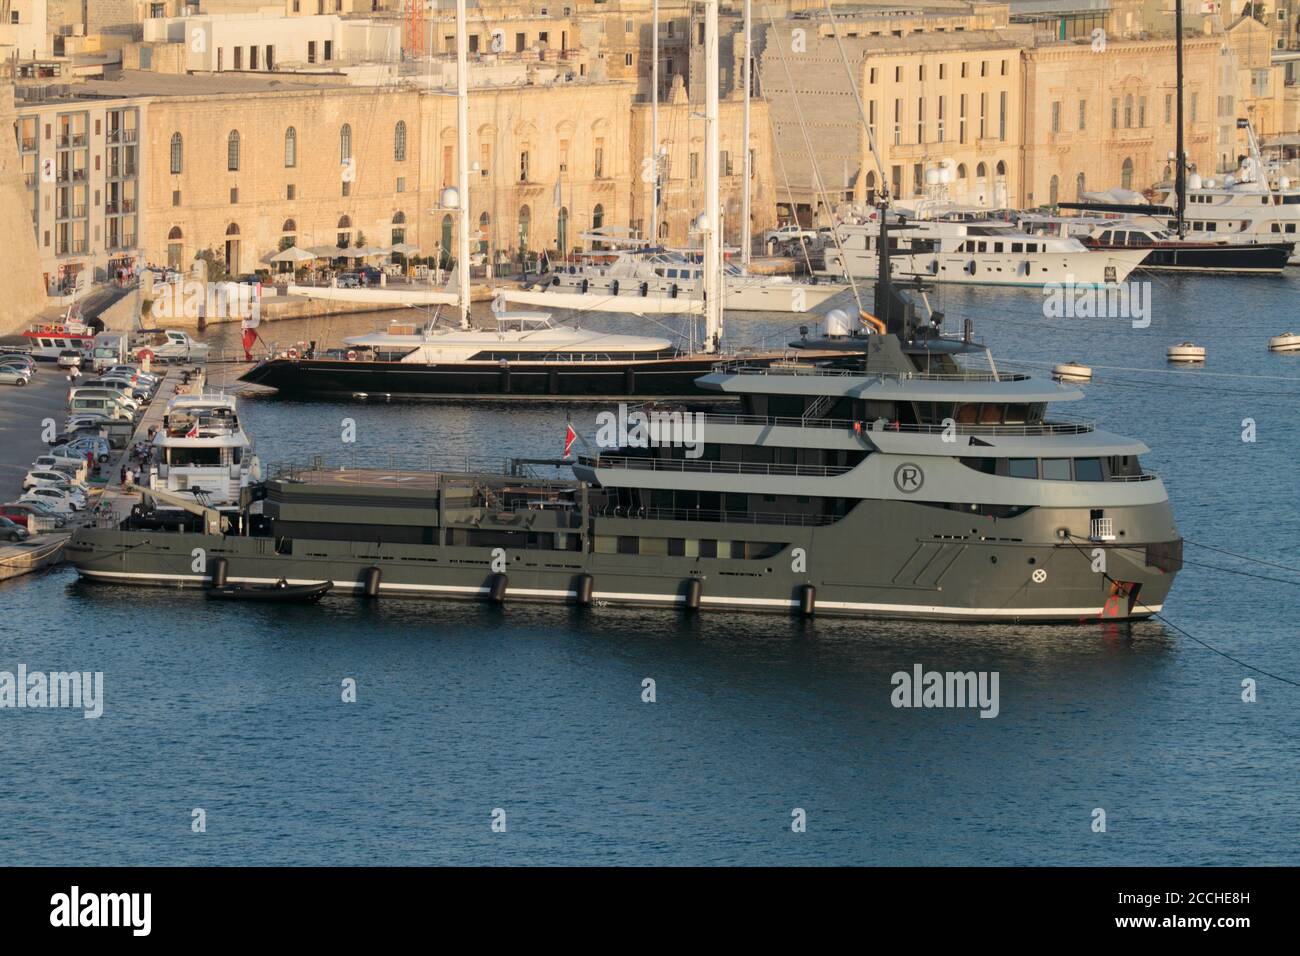 The luxury explorer and icebreaker yacht Ragnar in Malta's Grand Harbour Stock Photo